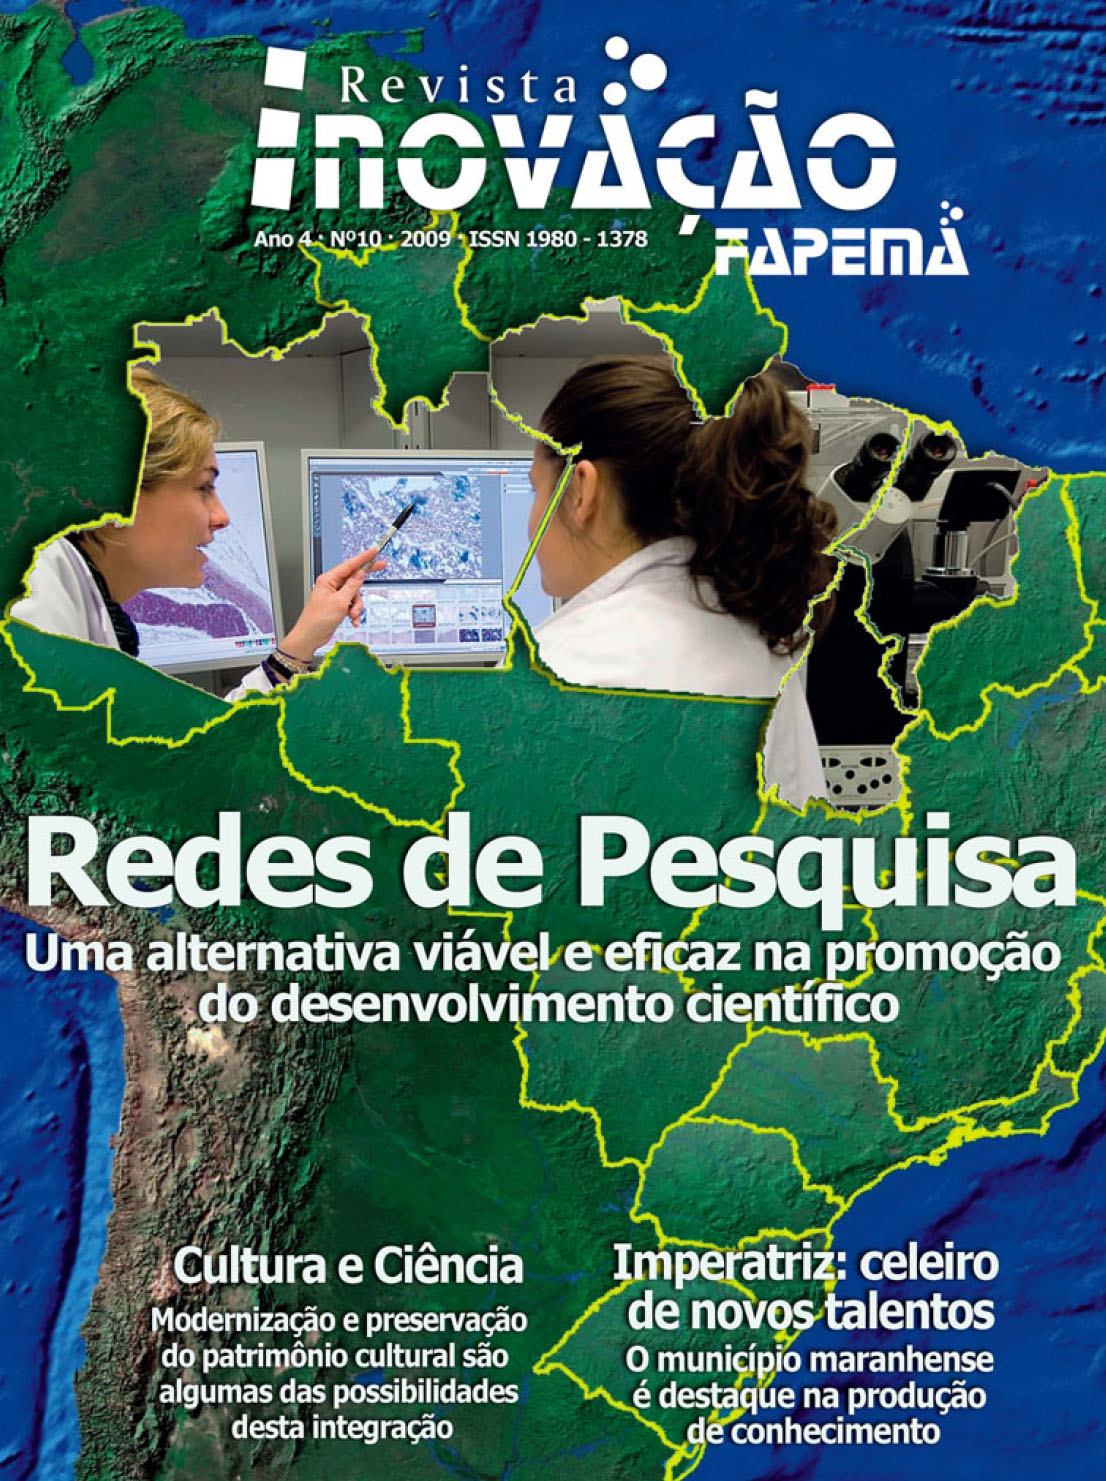 CAPAS revista Inovacao 01 - 26_0009_Camada 13